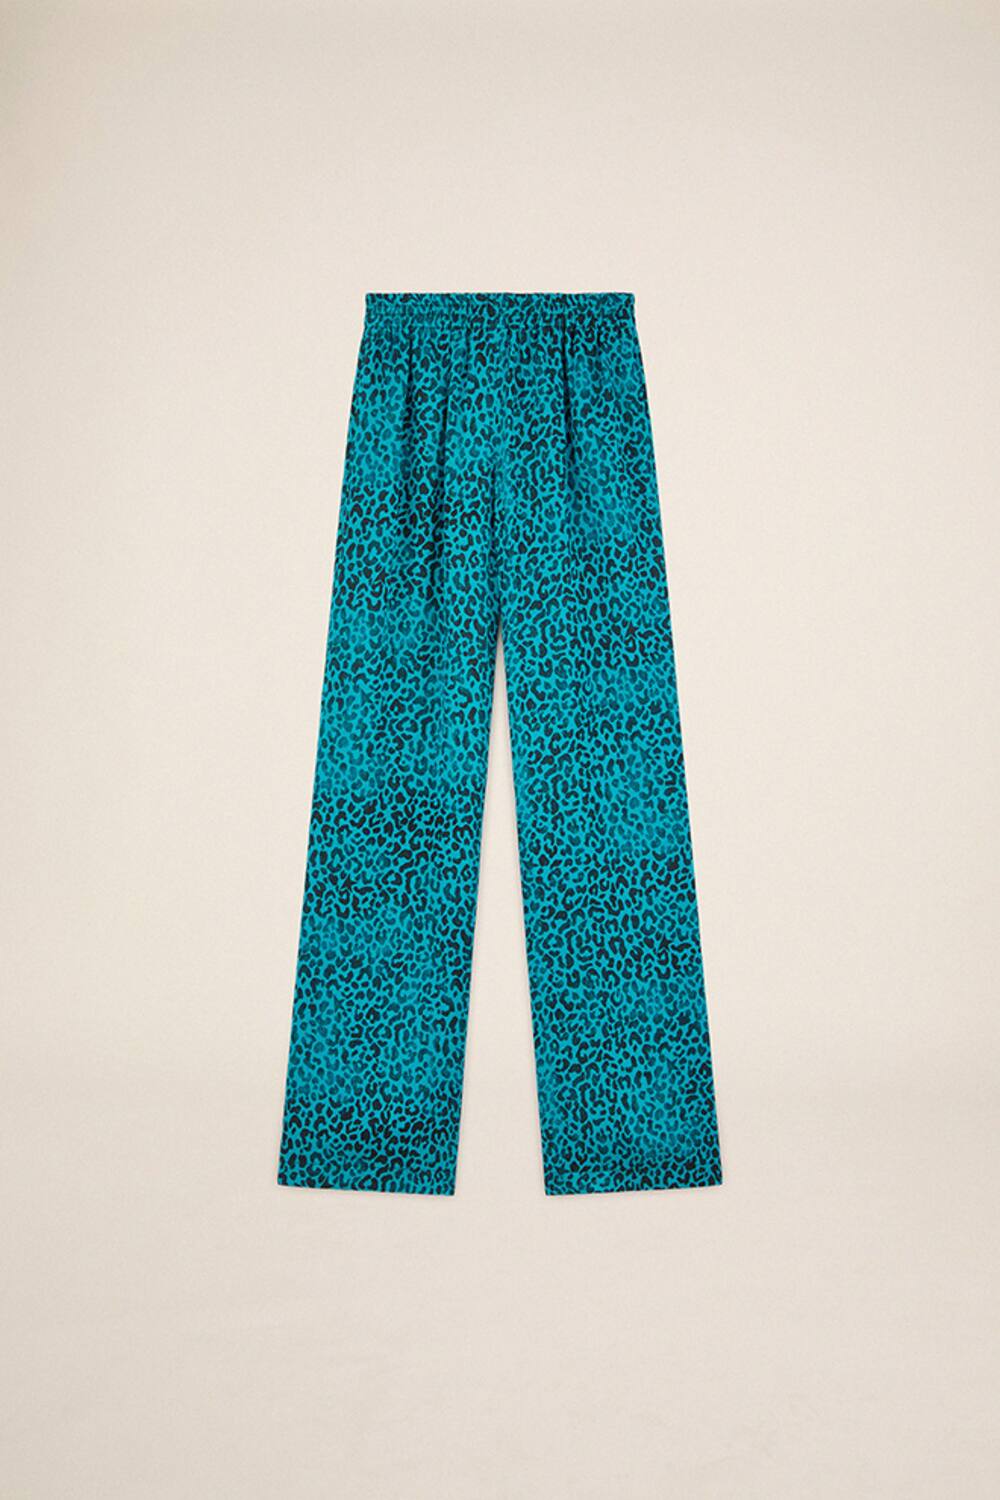 Golden Goose - Leopard Blue Pants in 